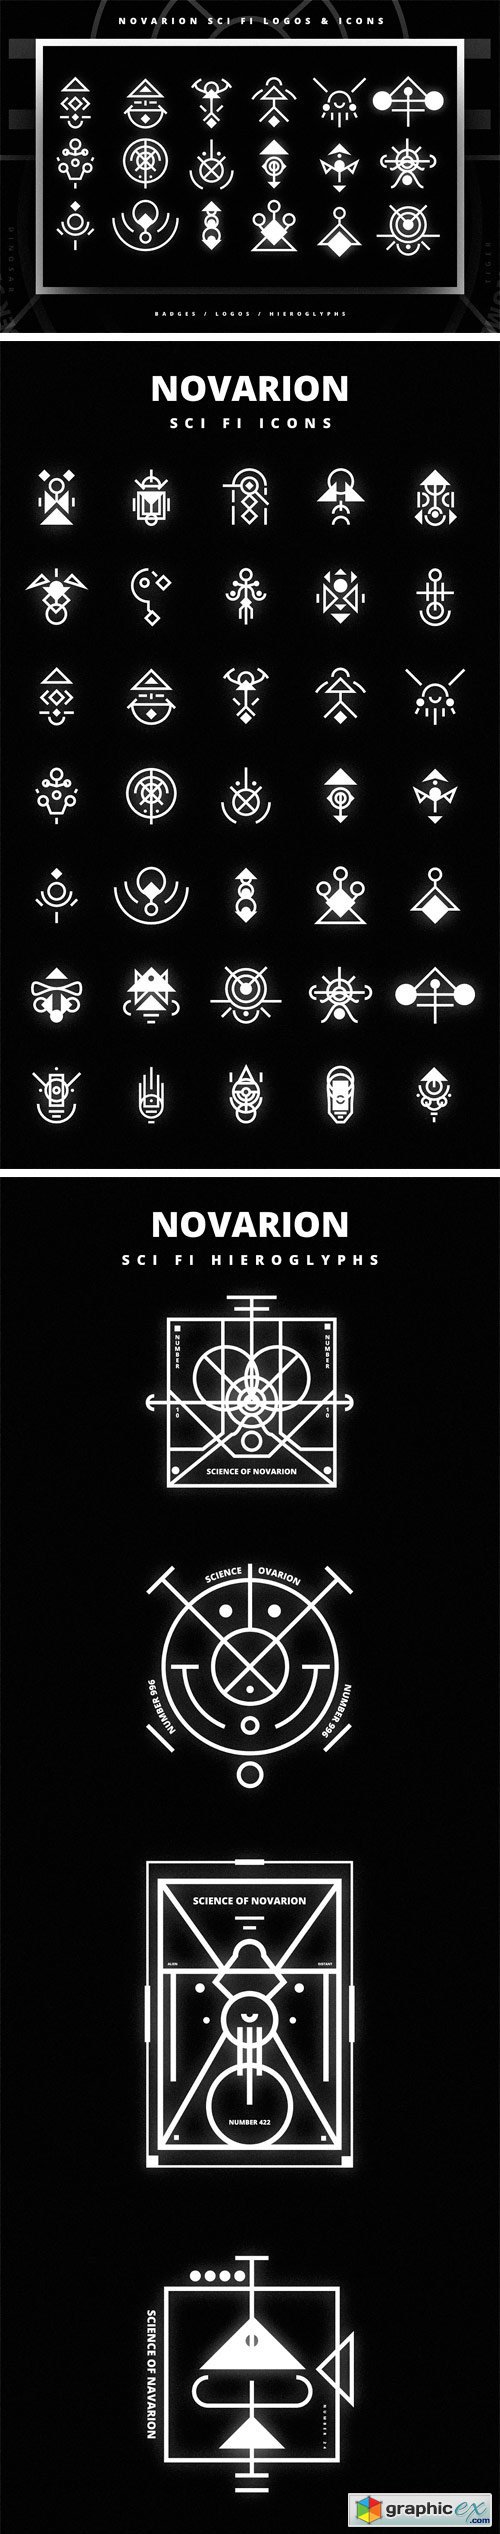 Novarion Sci Fi Logos & Icons